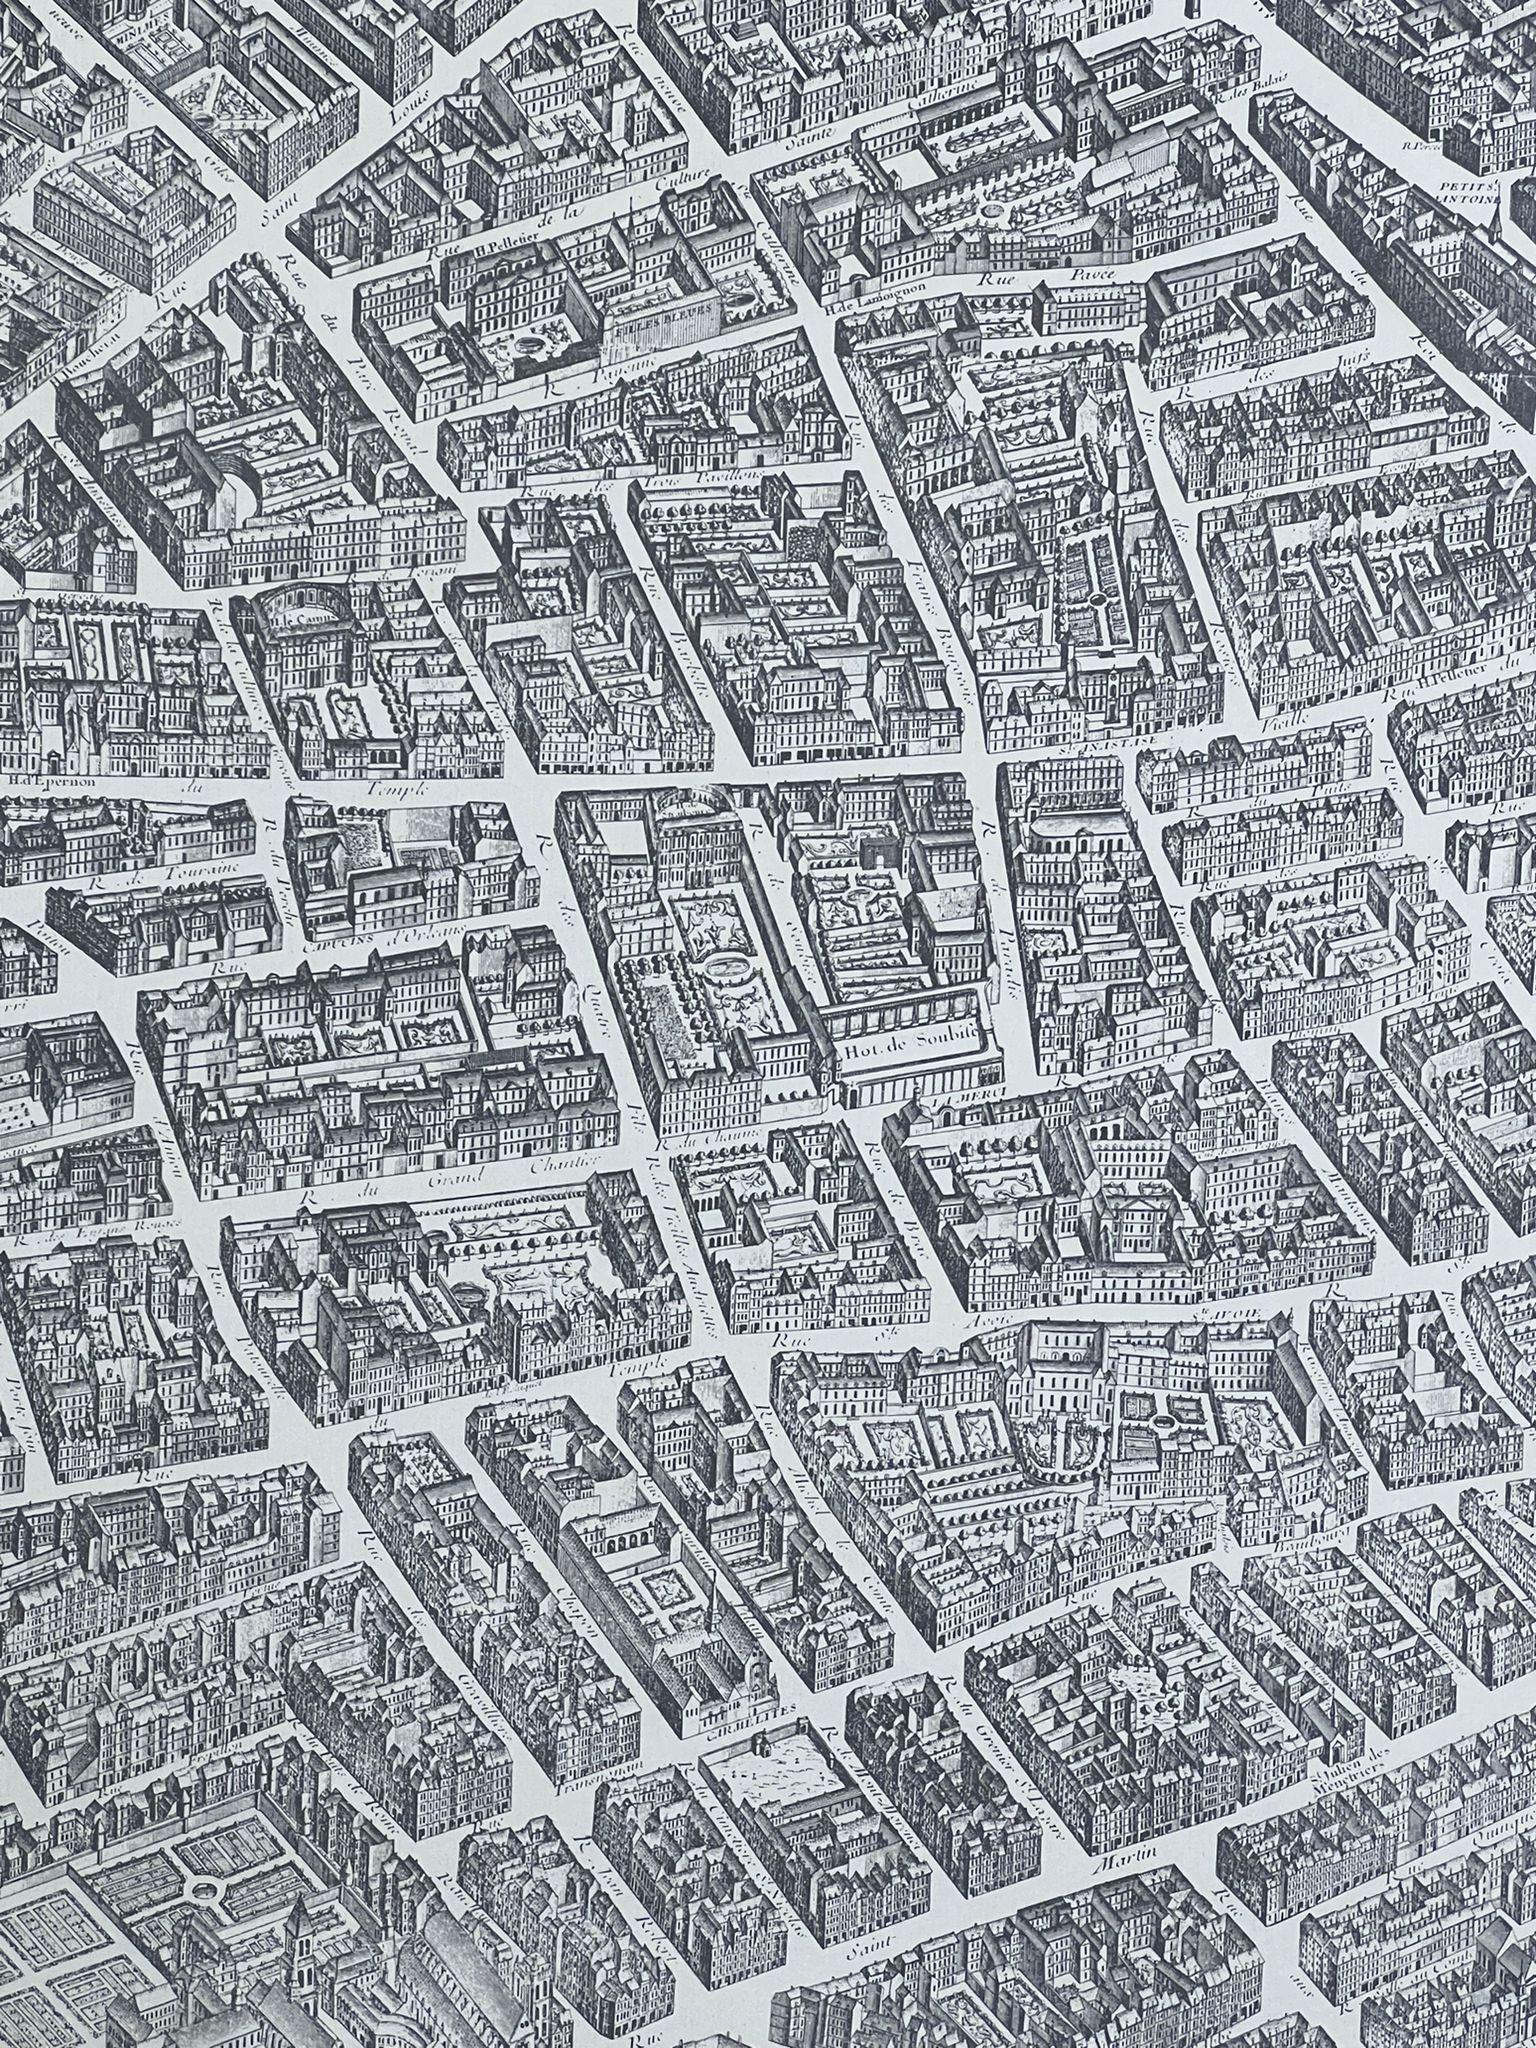 Vintage Black and White Ariel View Map Of Paris 1